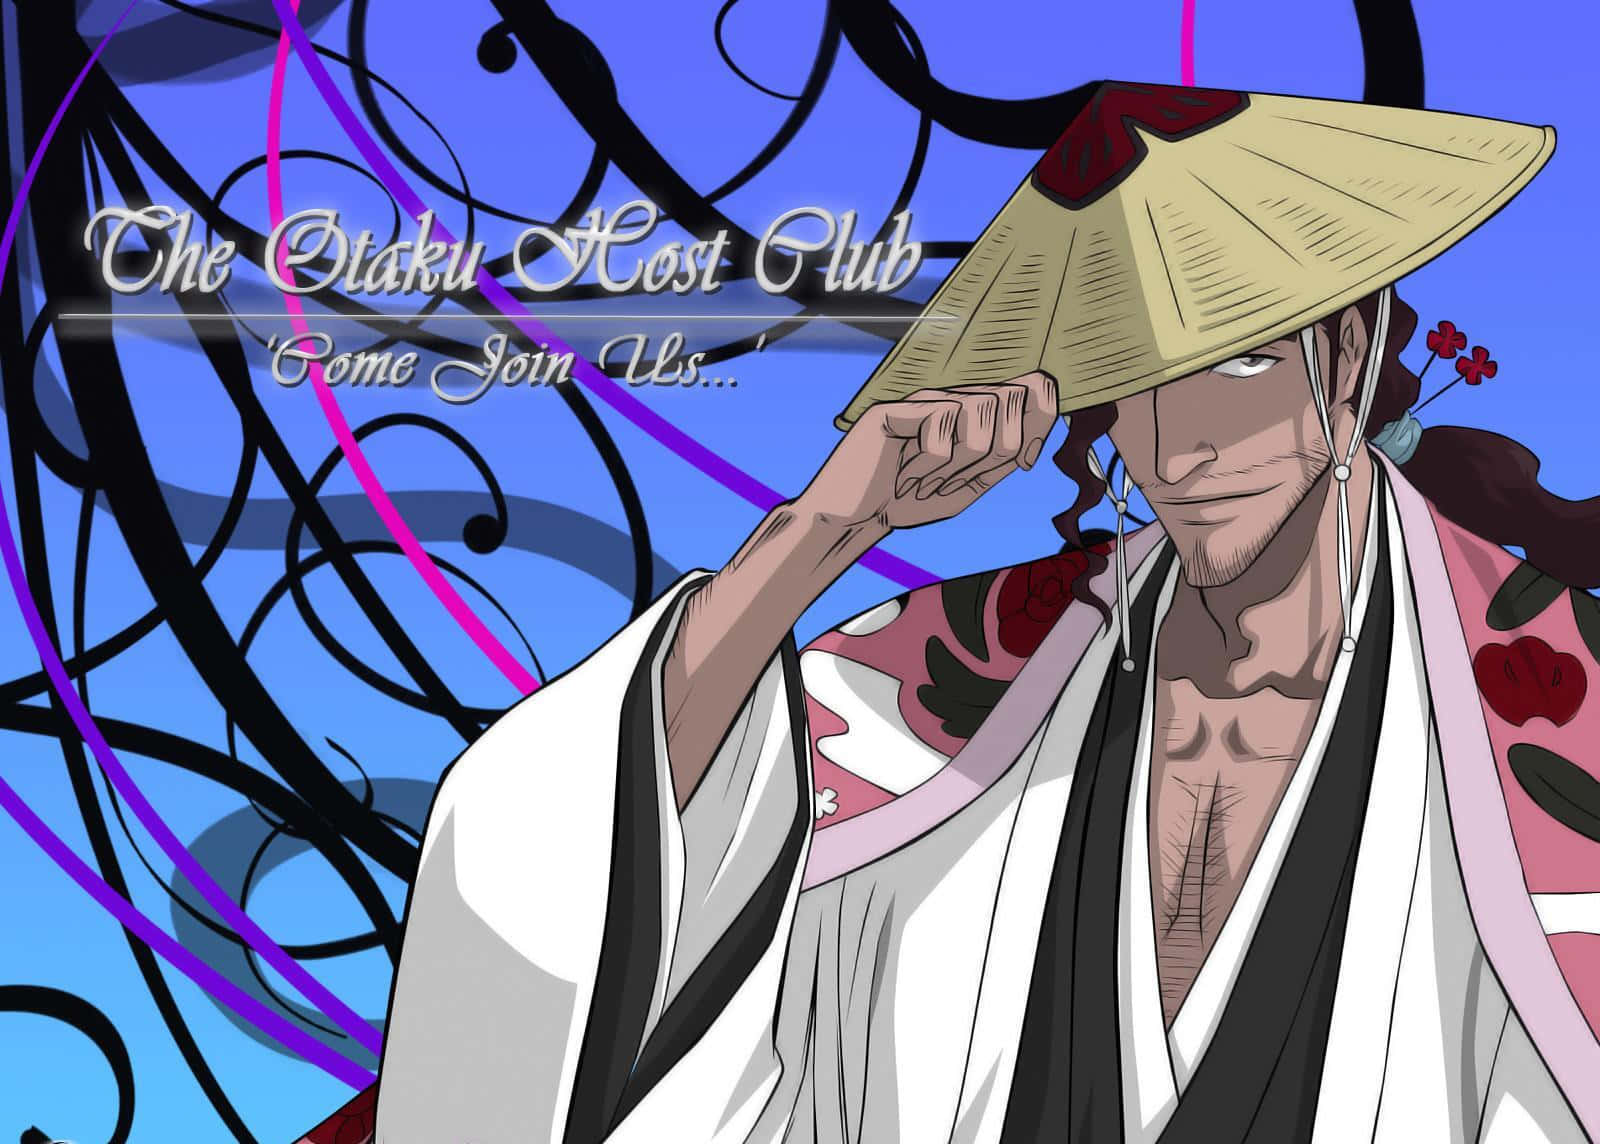 Shunsui Kyoraku, a master swordsman and captain of the Soul Society Wallpaper